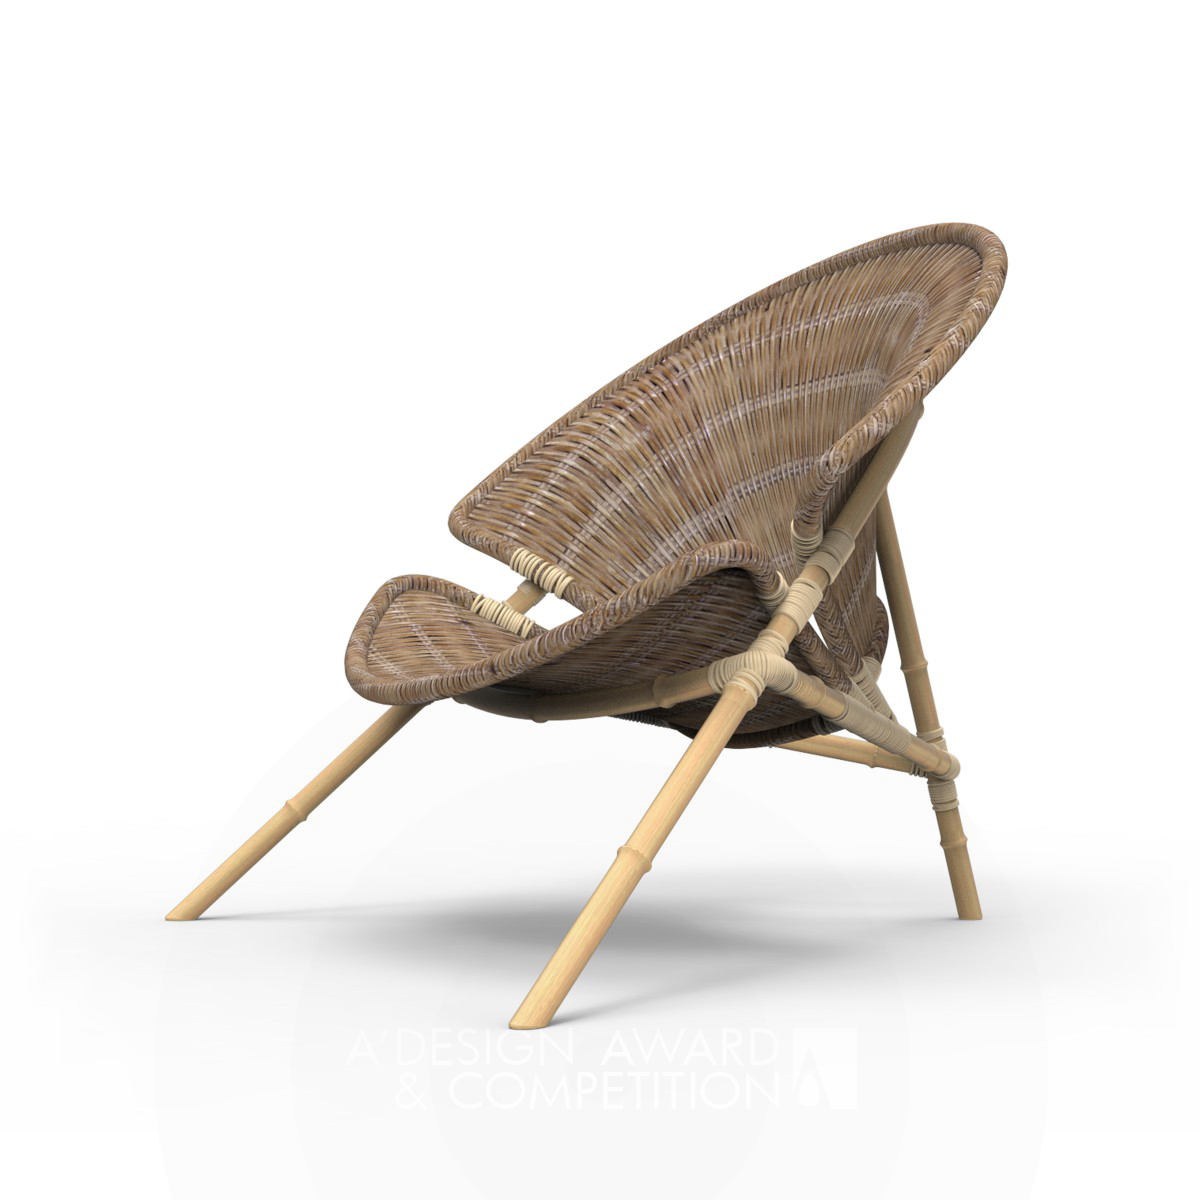 Bamboo Leisure Chair by Wei Jingye and Li Jiashu Iron Furniture Design Award Winner 2021 